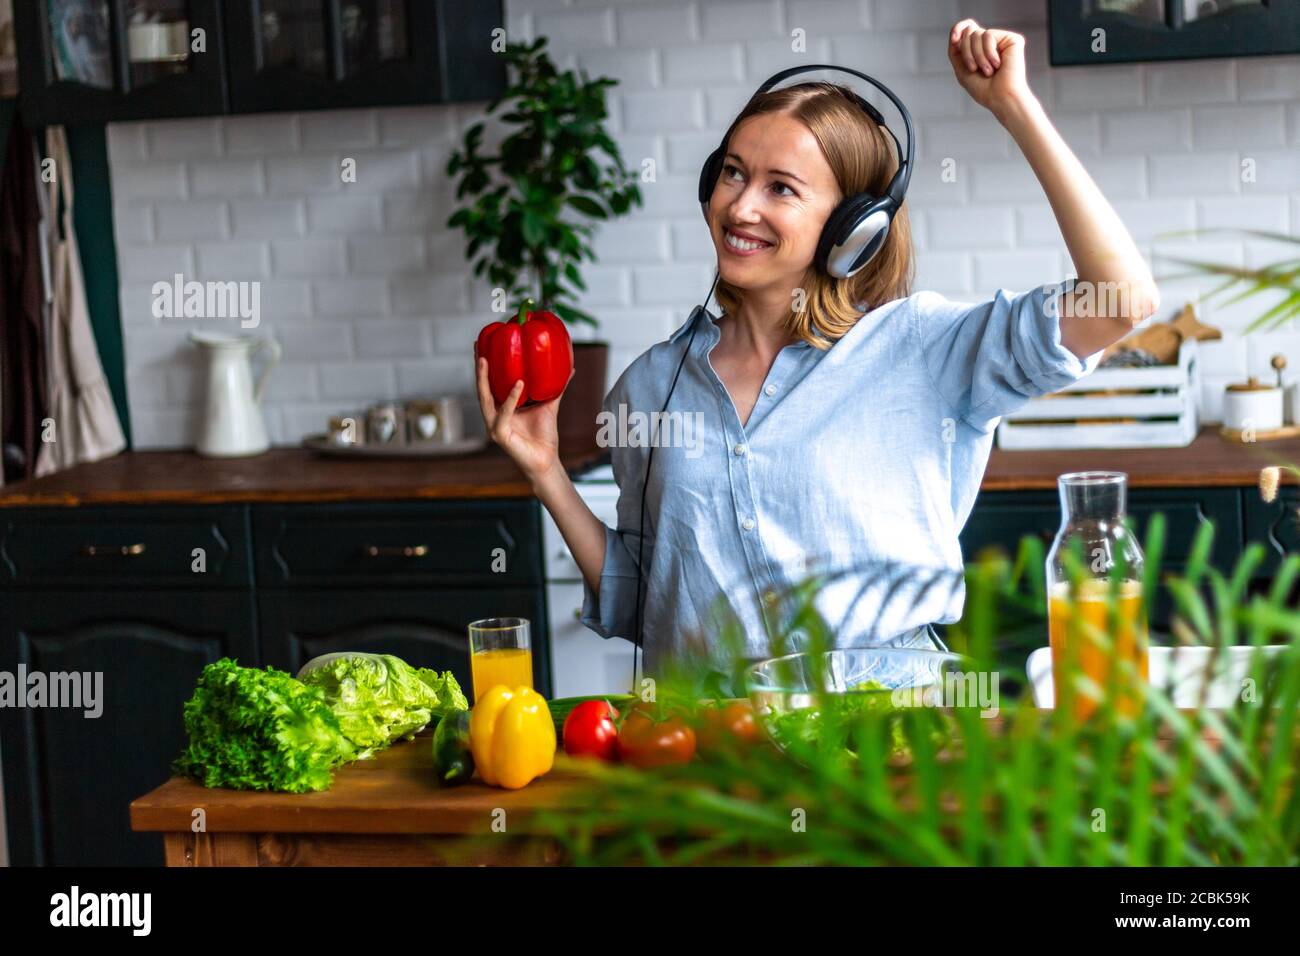 Donna danzante in cuffia in cucina cucinando verdure sane Foto